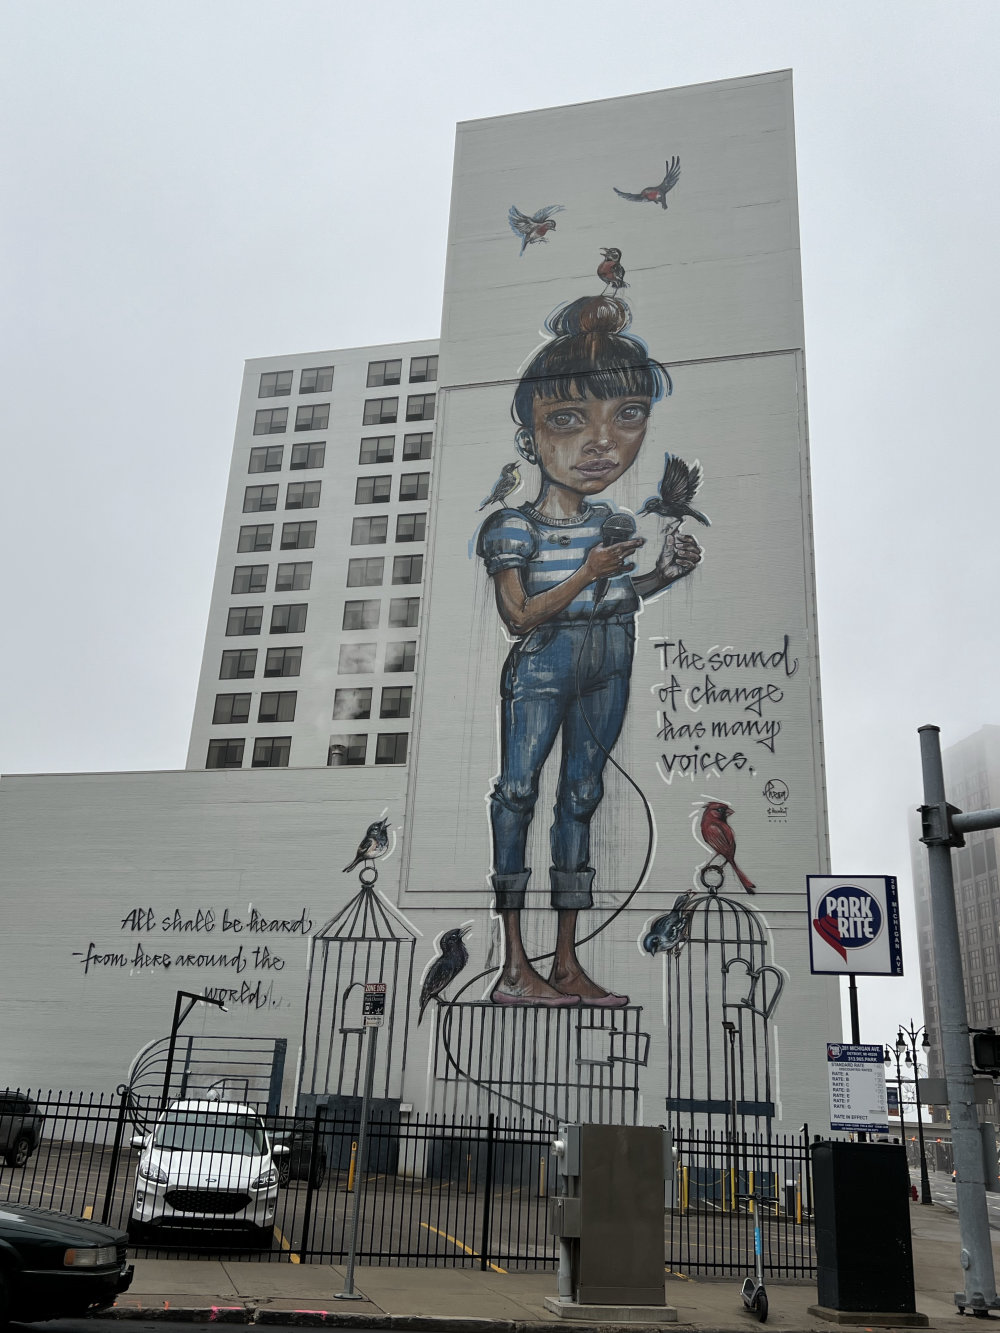 mural in Detroit by artist Herakut.